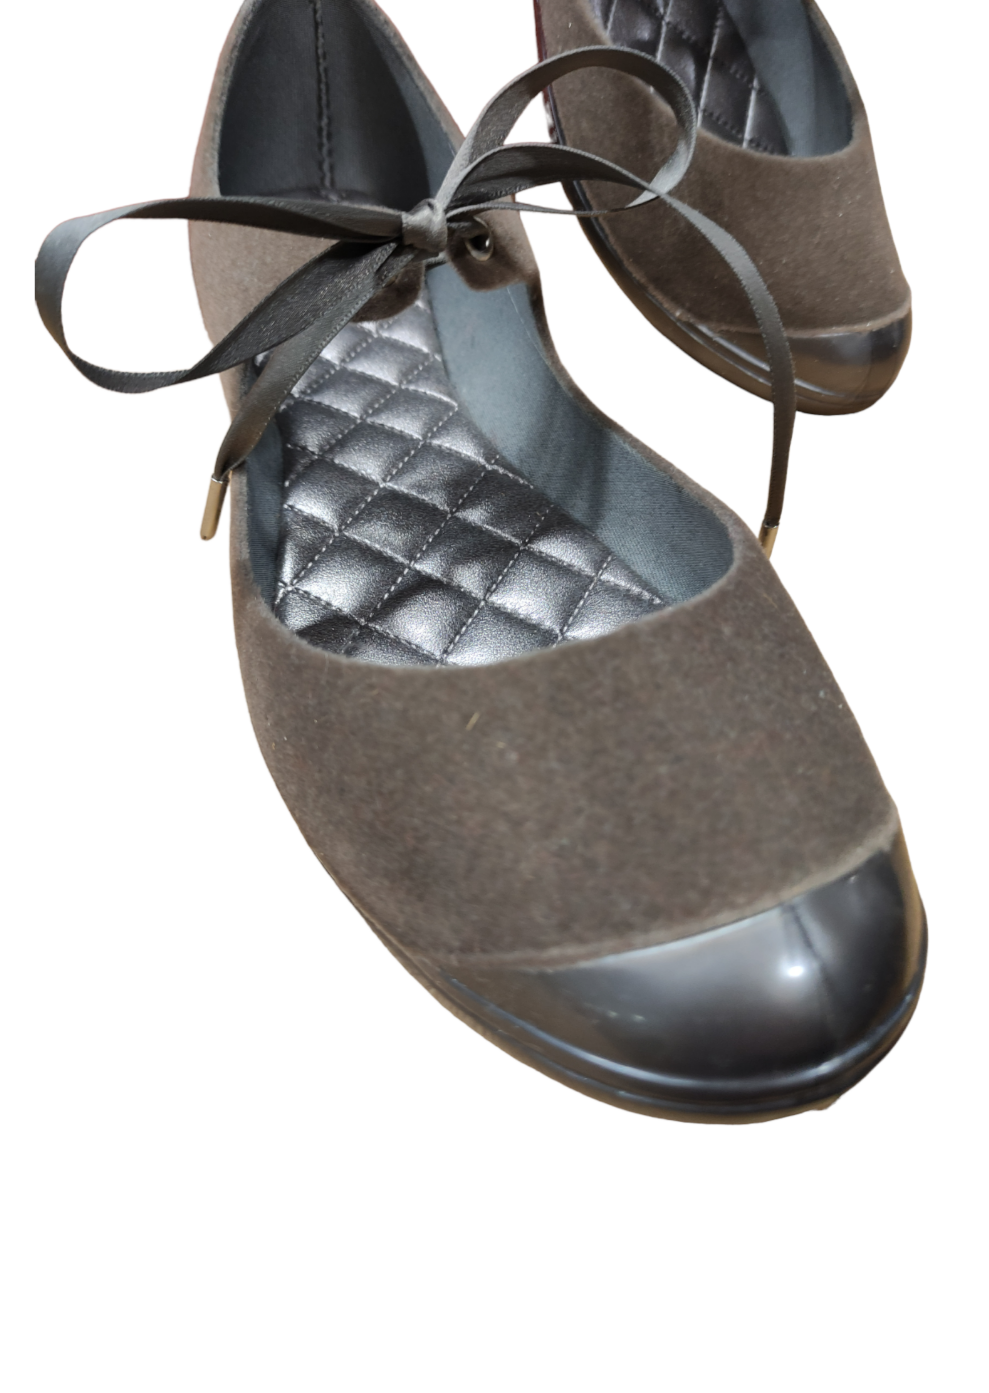 Stock Γυναικεία Παπούτσια χαμηλά MELISSA σε Χακί Χρώμα (No 39)